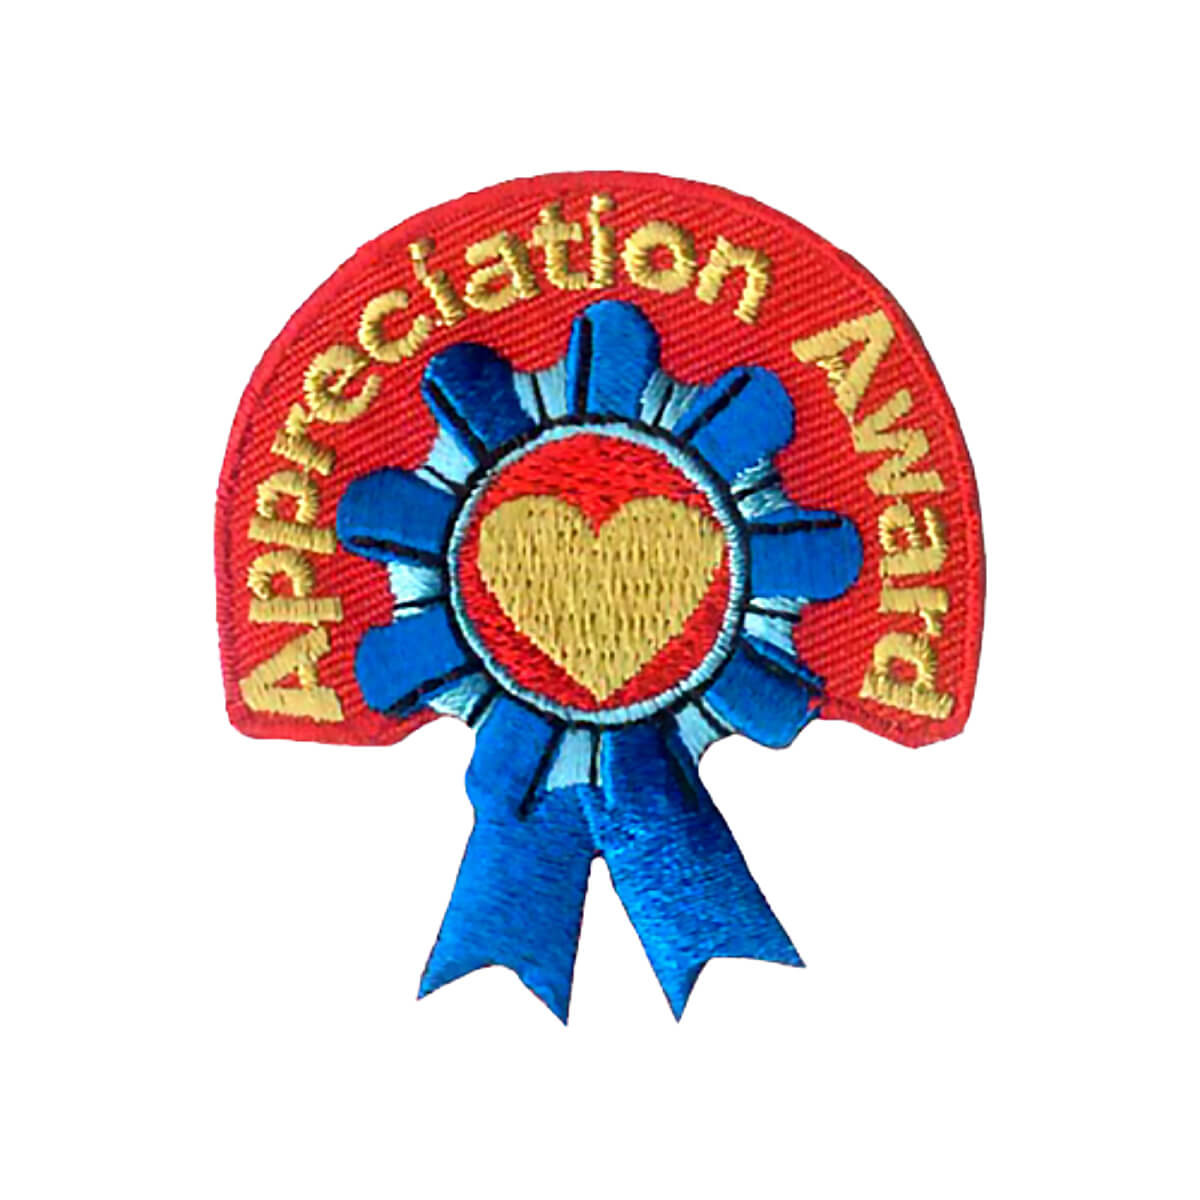 Appreciation Award - W